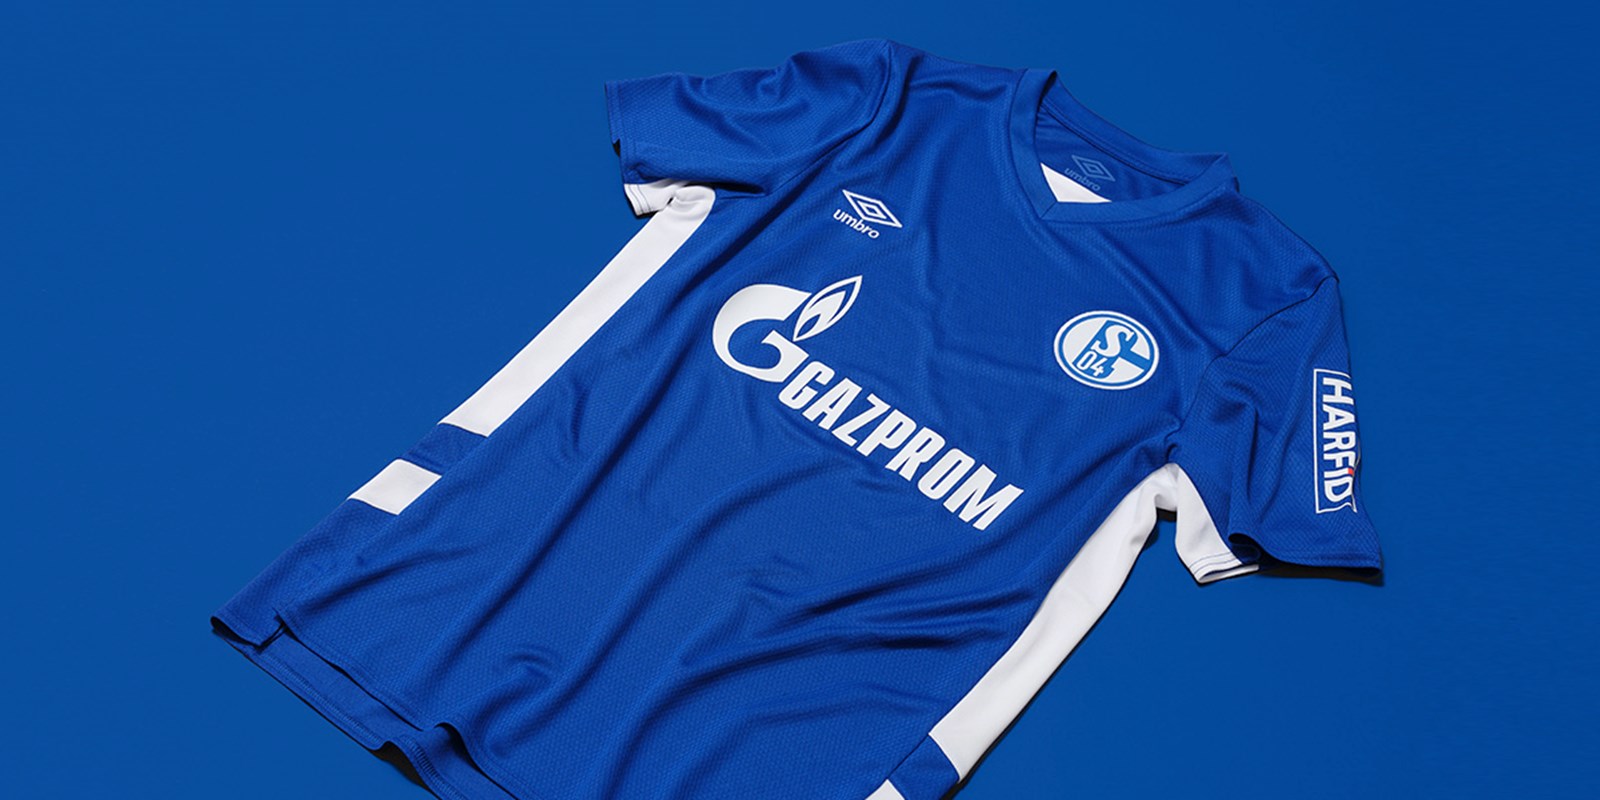 Interactie Bron gastvrouw FC Schalke 04 21/22 home kit